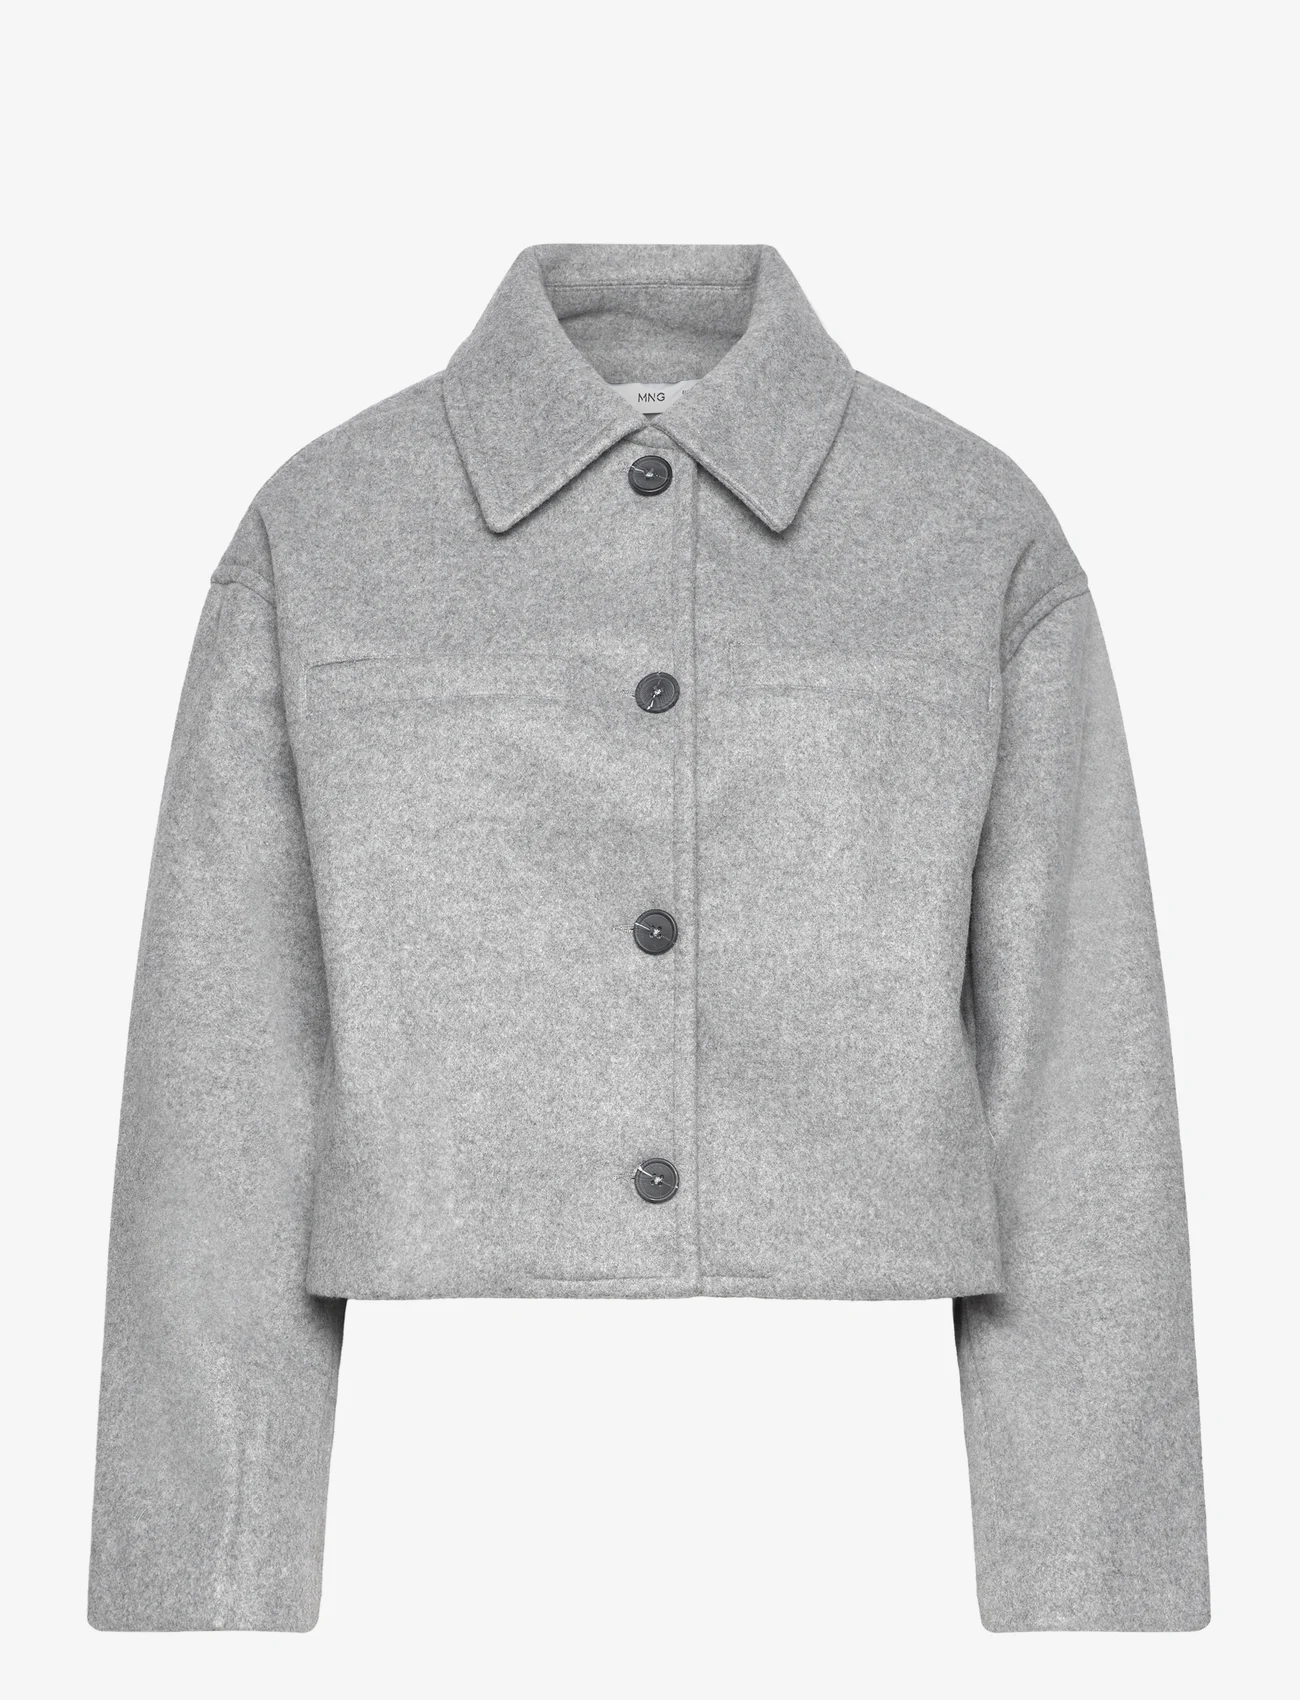 Mango - Buttoned jacket with pockets - festkläder till outletpriser - medium grey - 0